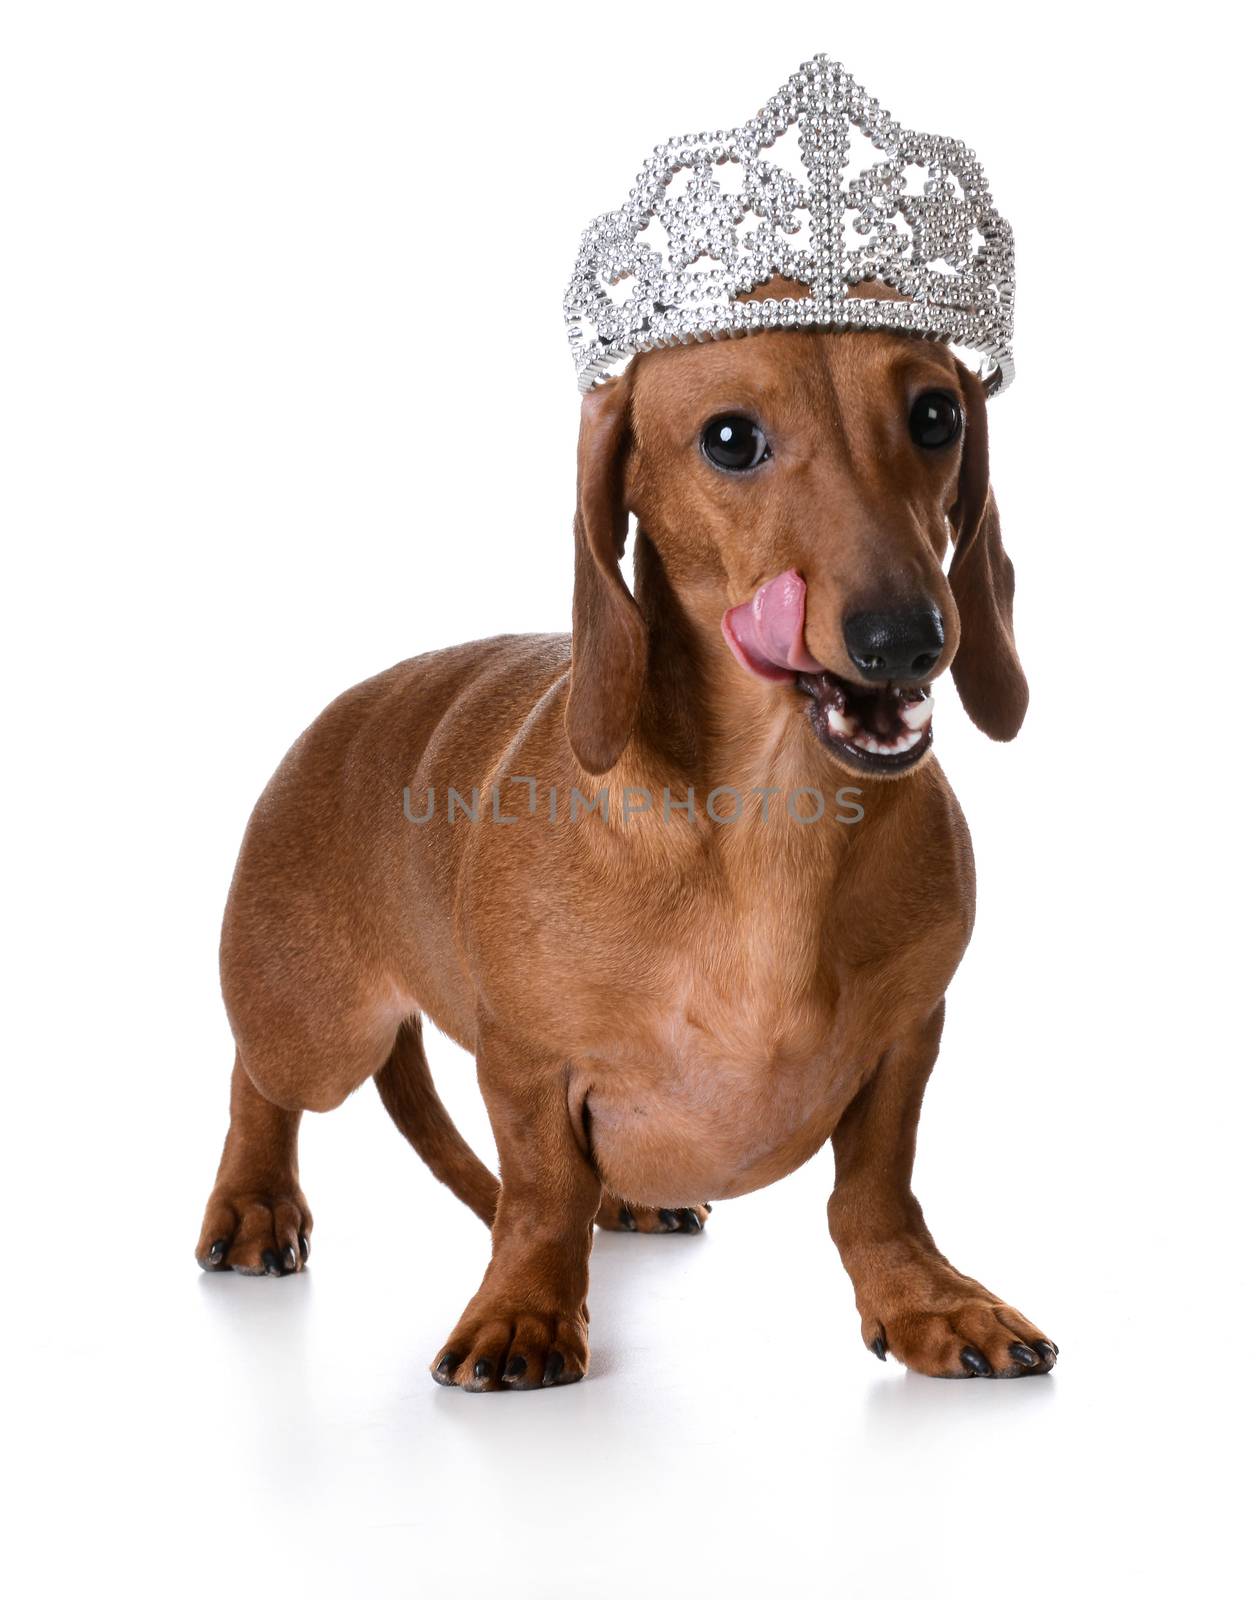 spoiled dog - miniature dachshund wearing tiara licking lips on white background